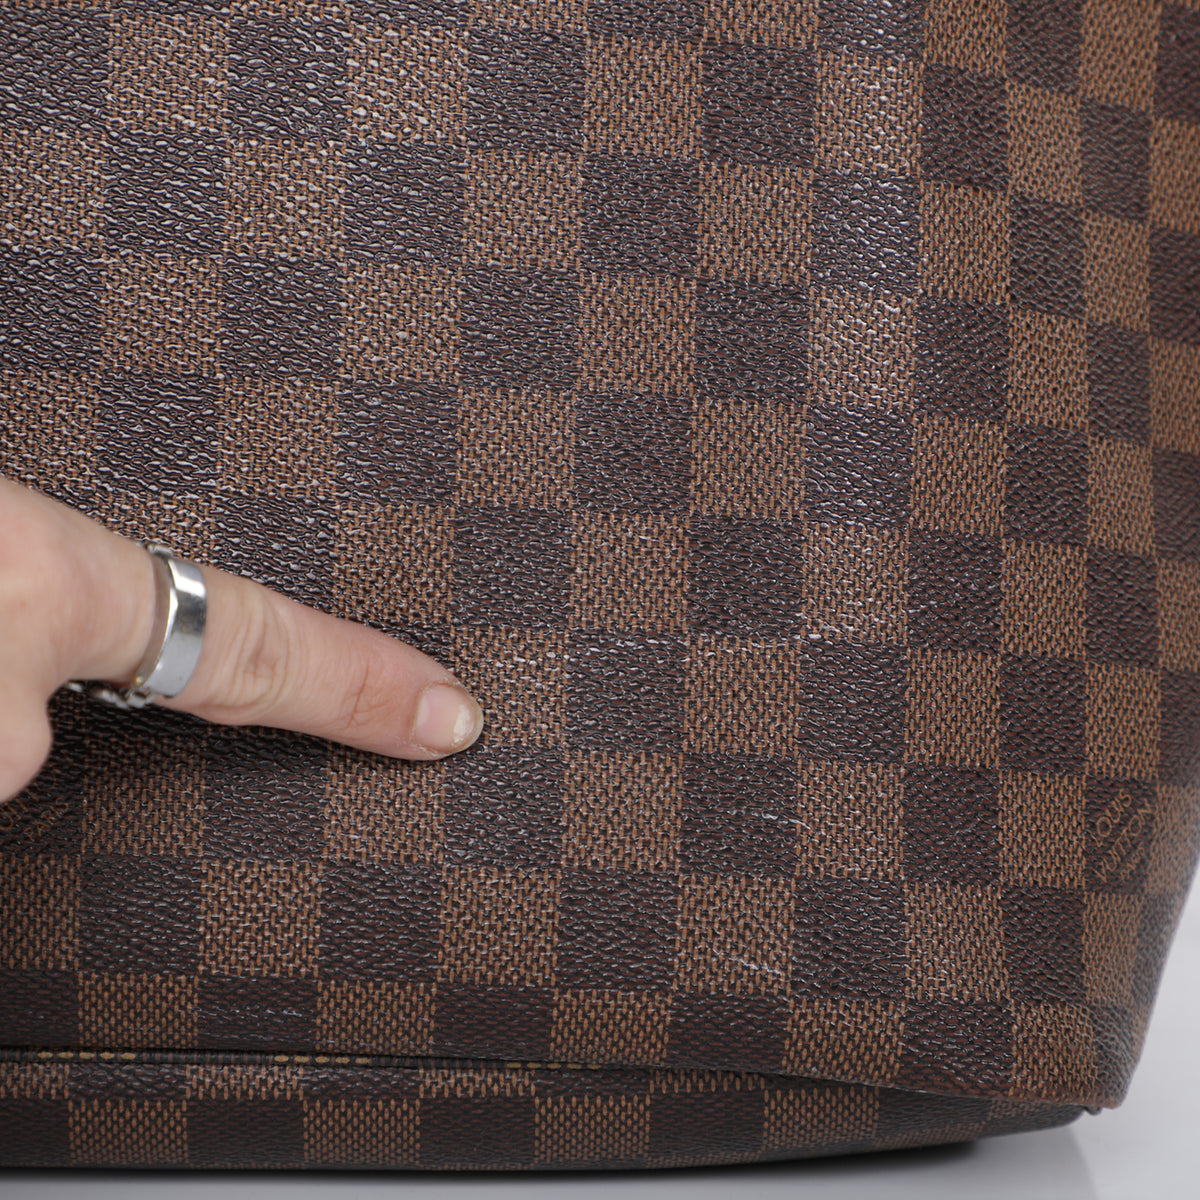 Louis Vuitton Damier Never Full Tote Leather Shoulder Bag